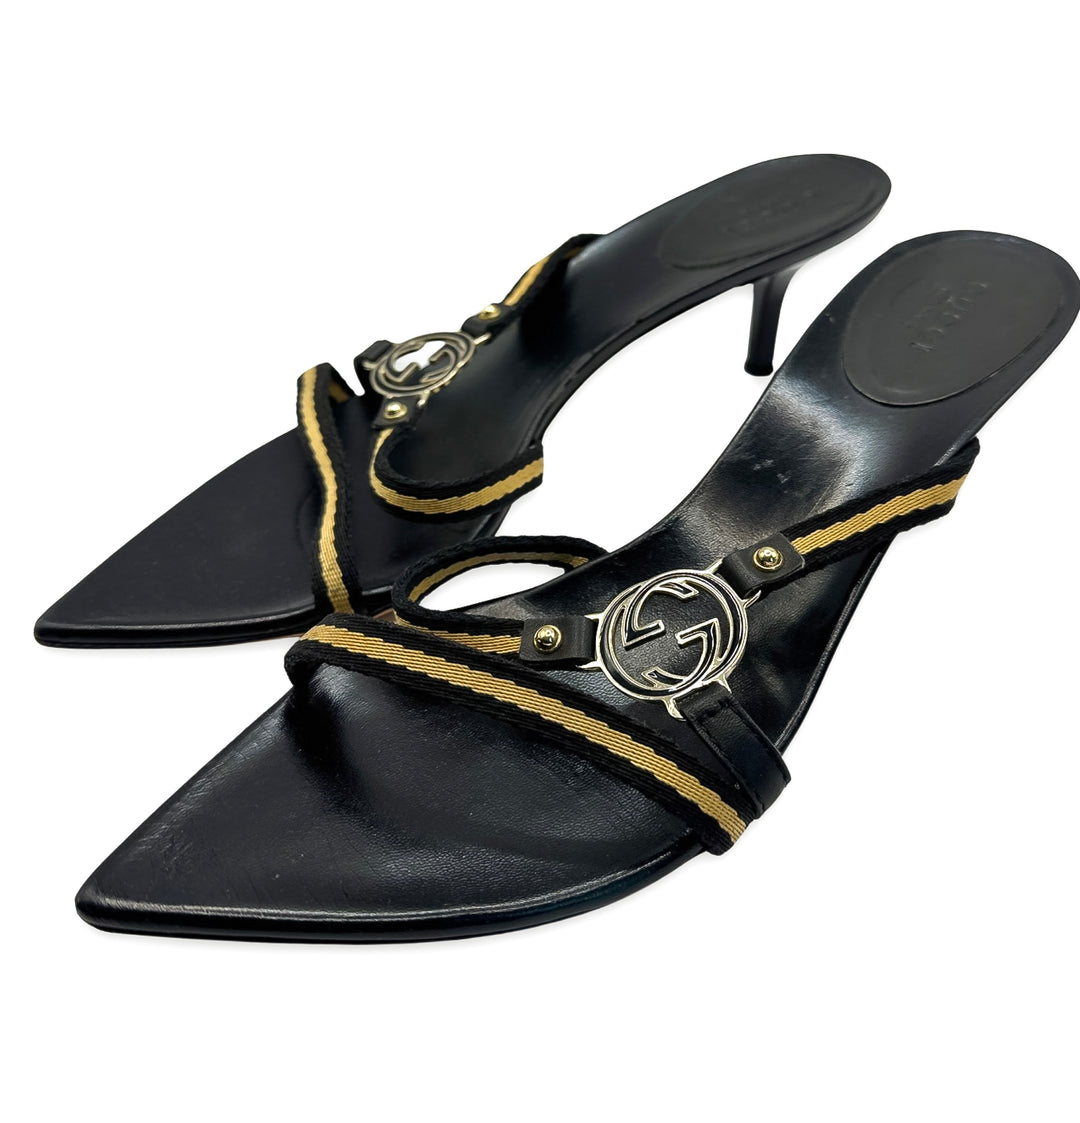 Gucci sandal heel size 39.5